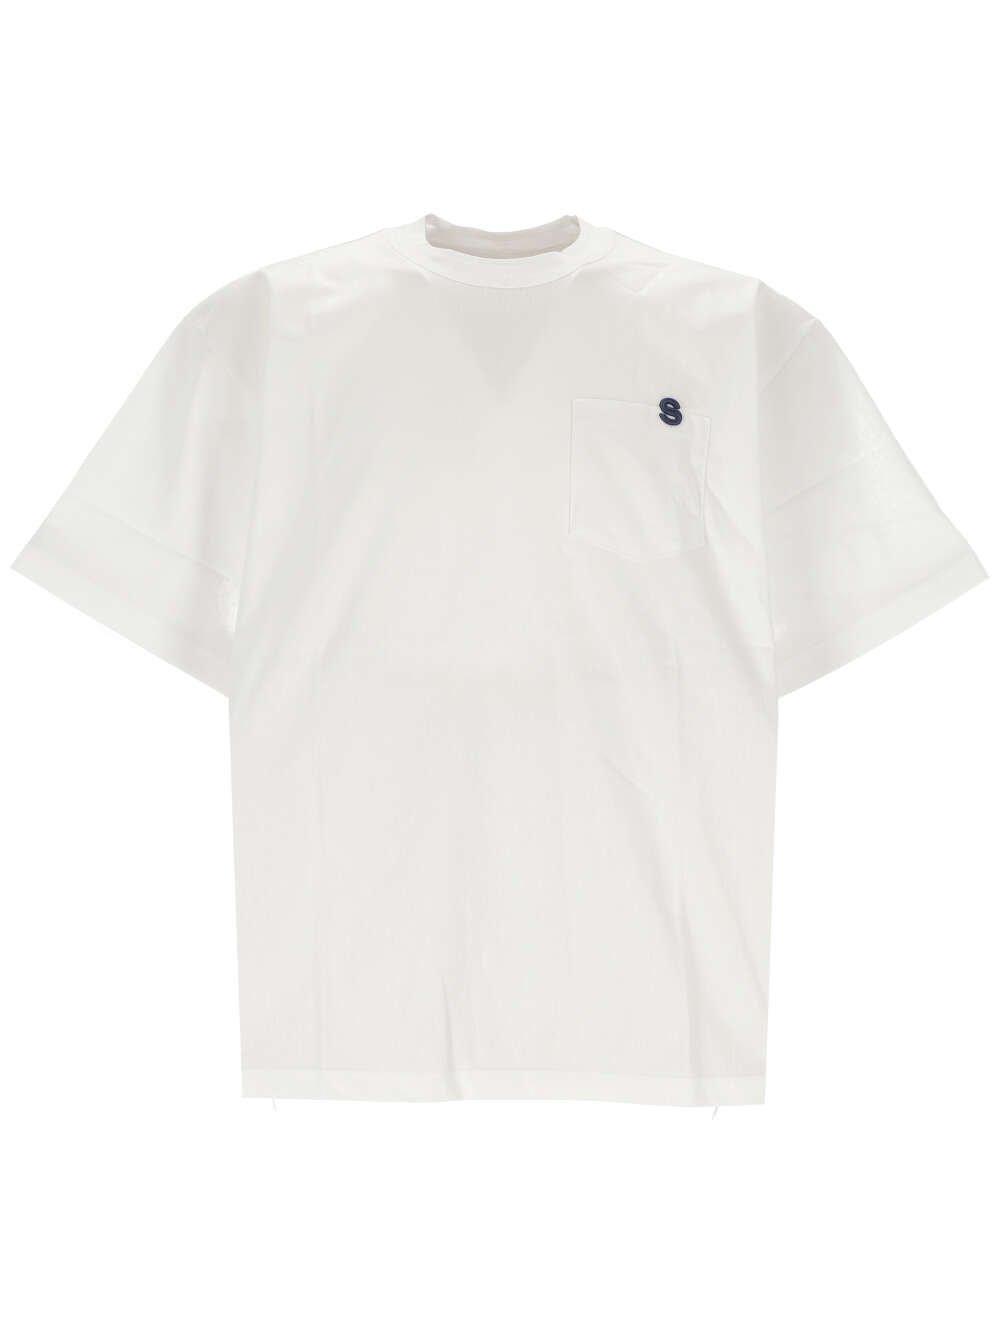 SACAI サカイ ホワイト White Tシャツ メンズ 春夏2024 SCM087 101 WHITE 【関税・送料無料】【ラッピング無料】 ia